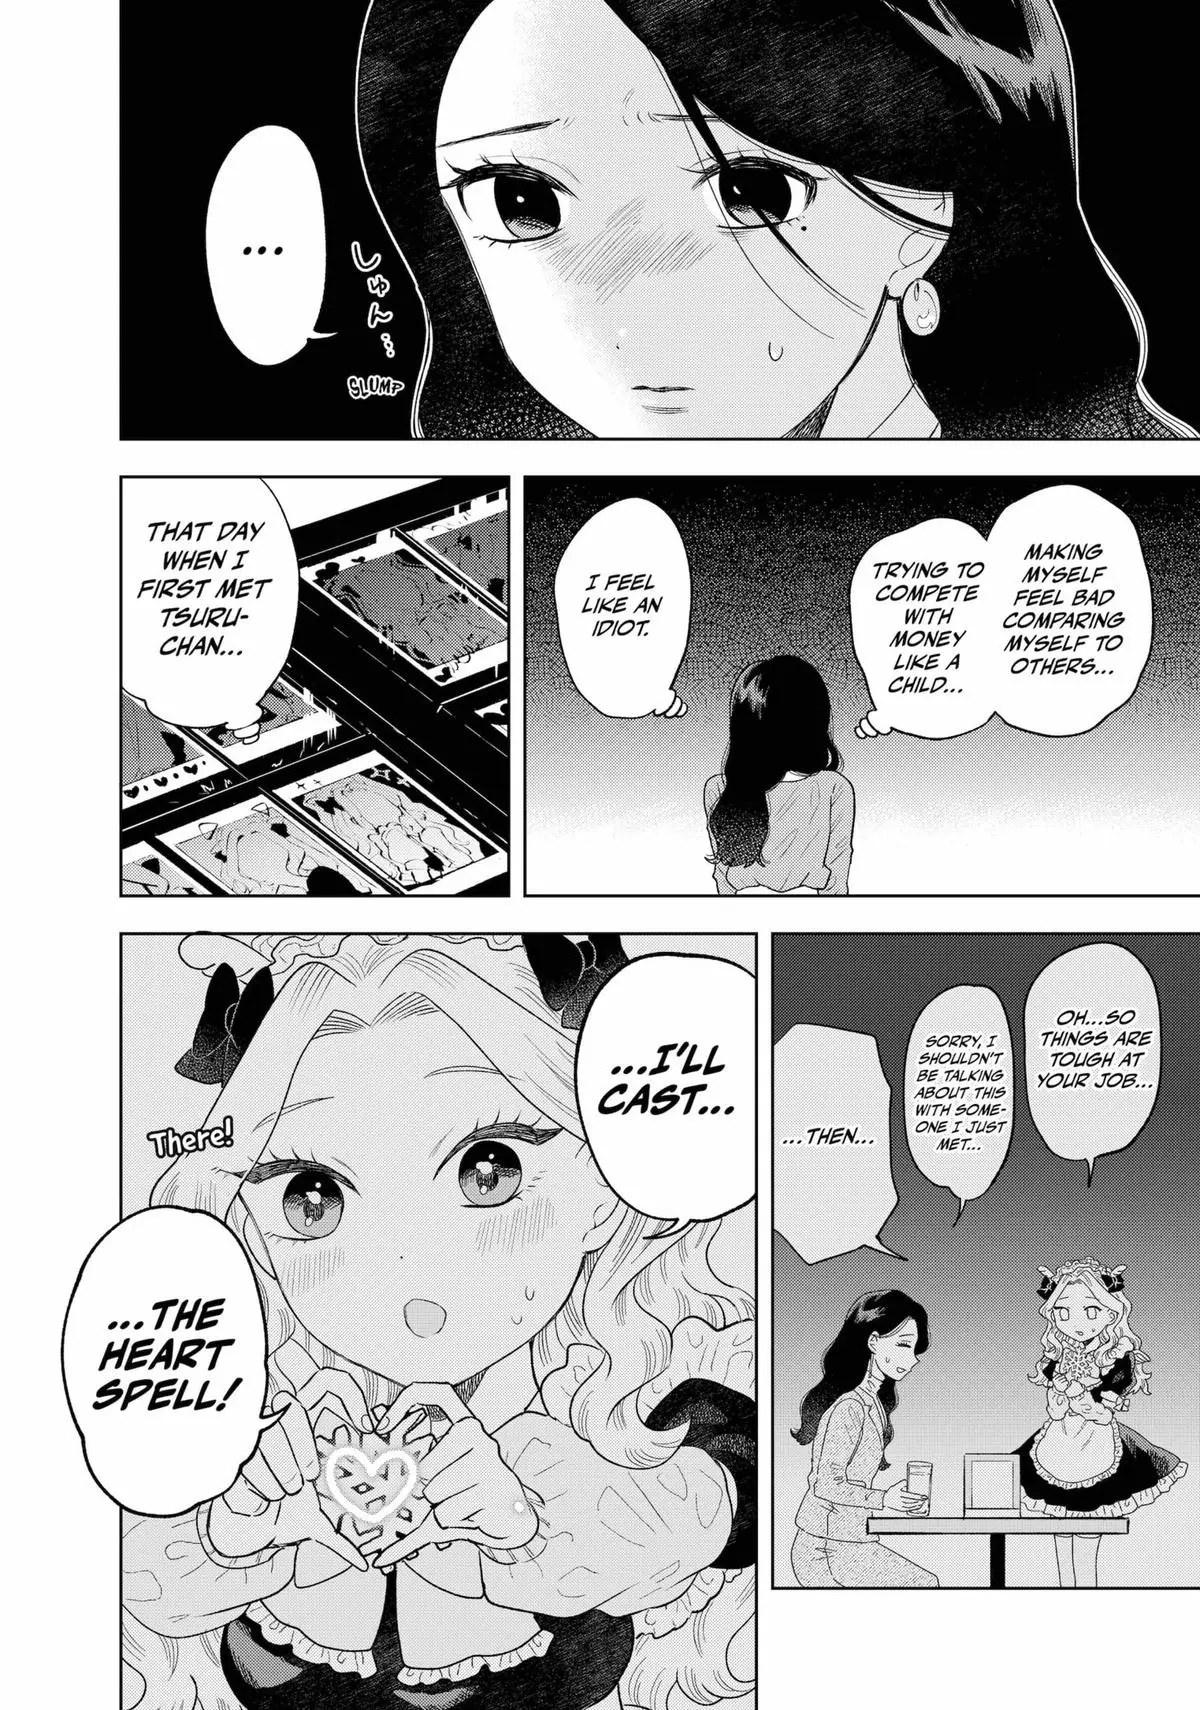 Tsuruko Returns The Favor - 10 page 16-0cb54f47